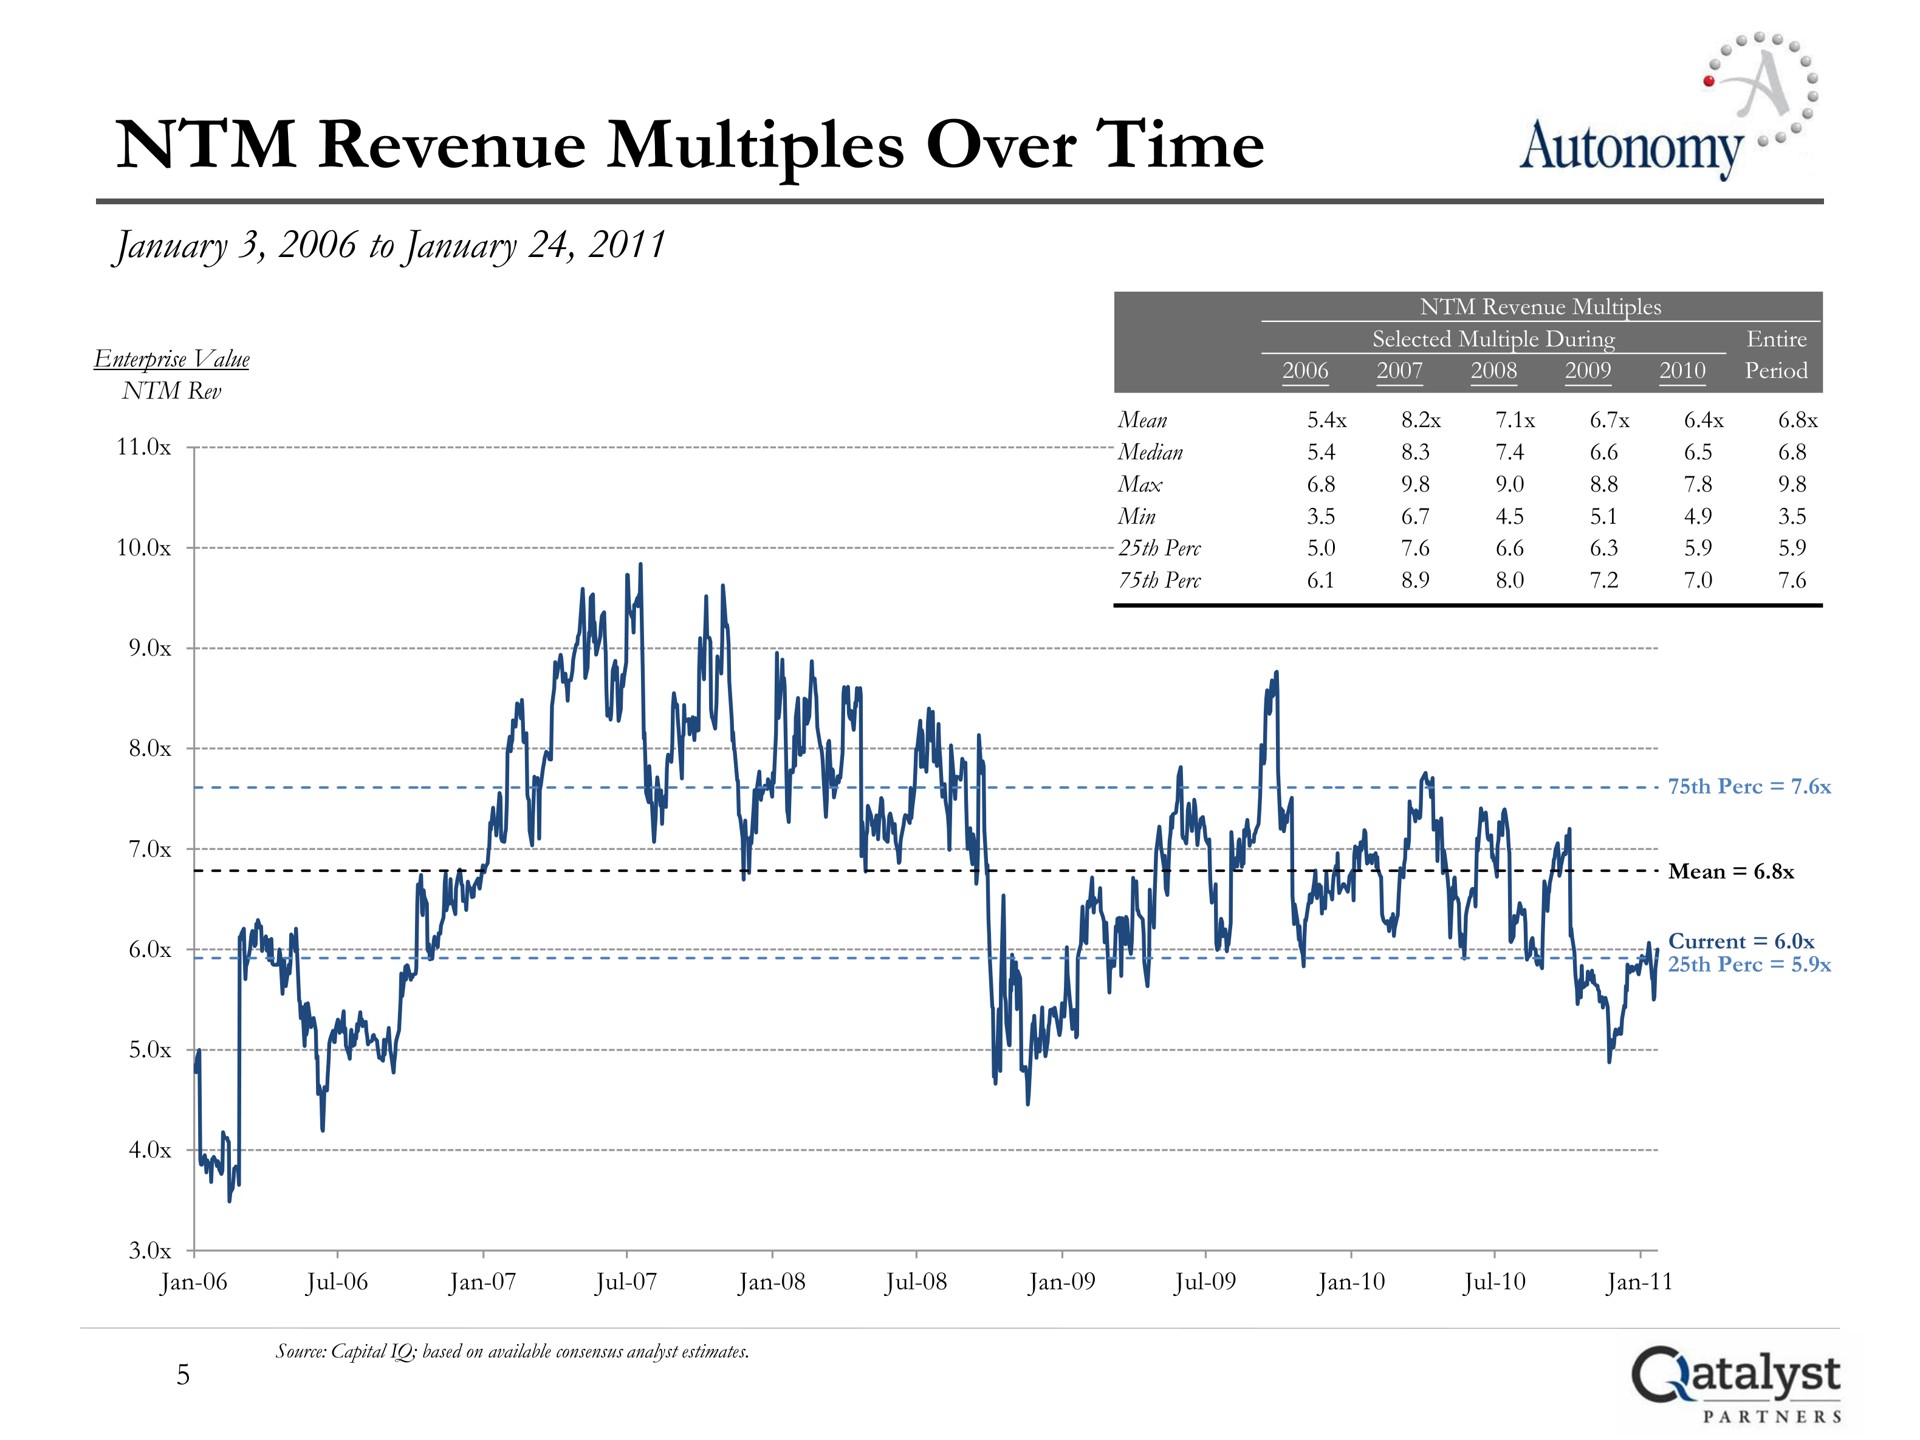 revenue multiples over time to autonomy | Qatalyst Partners